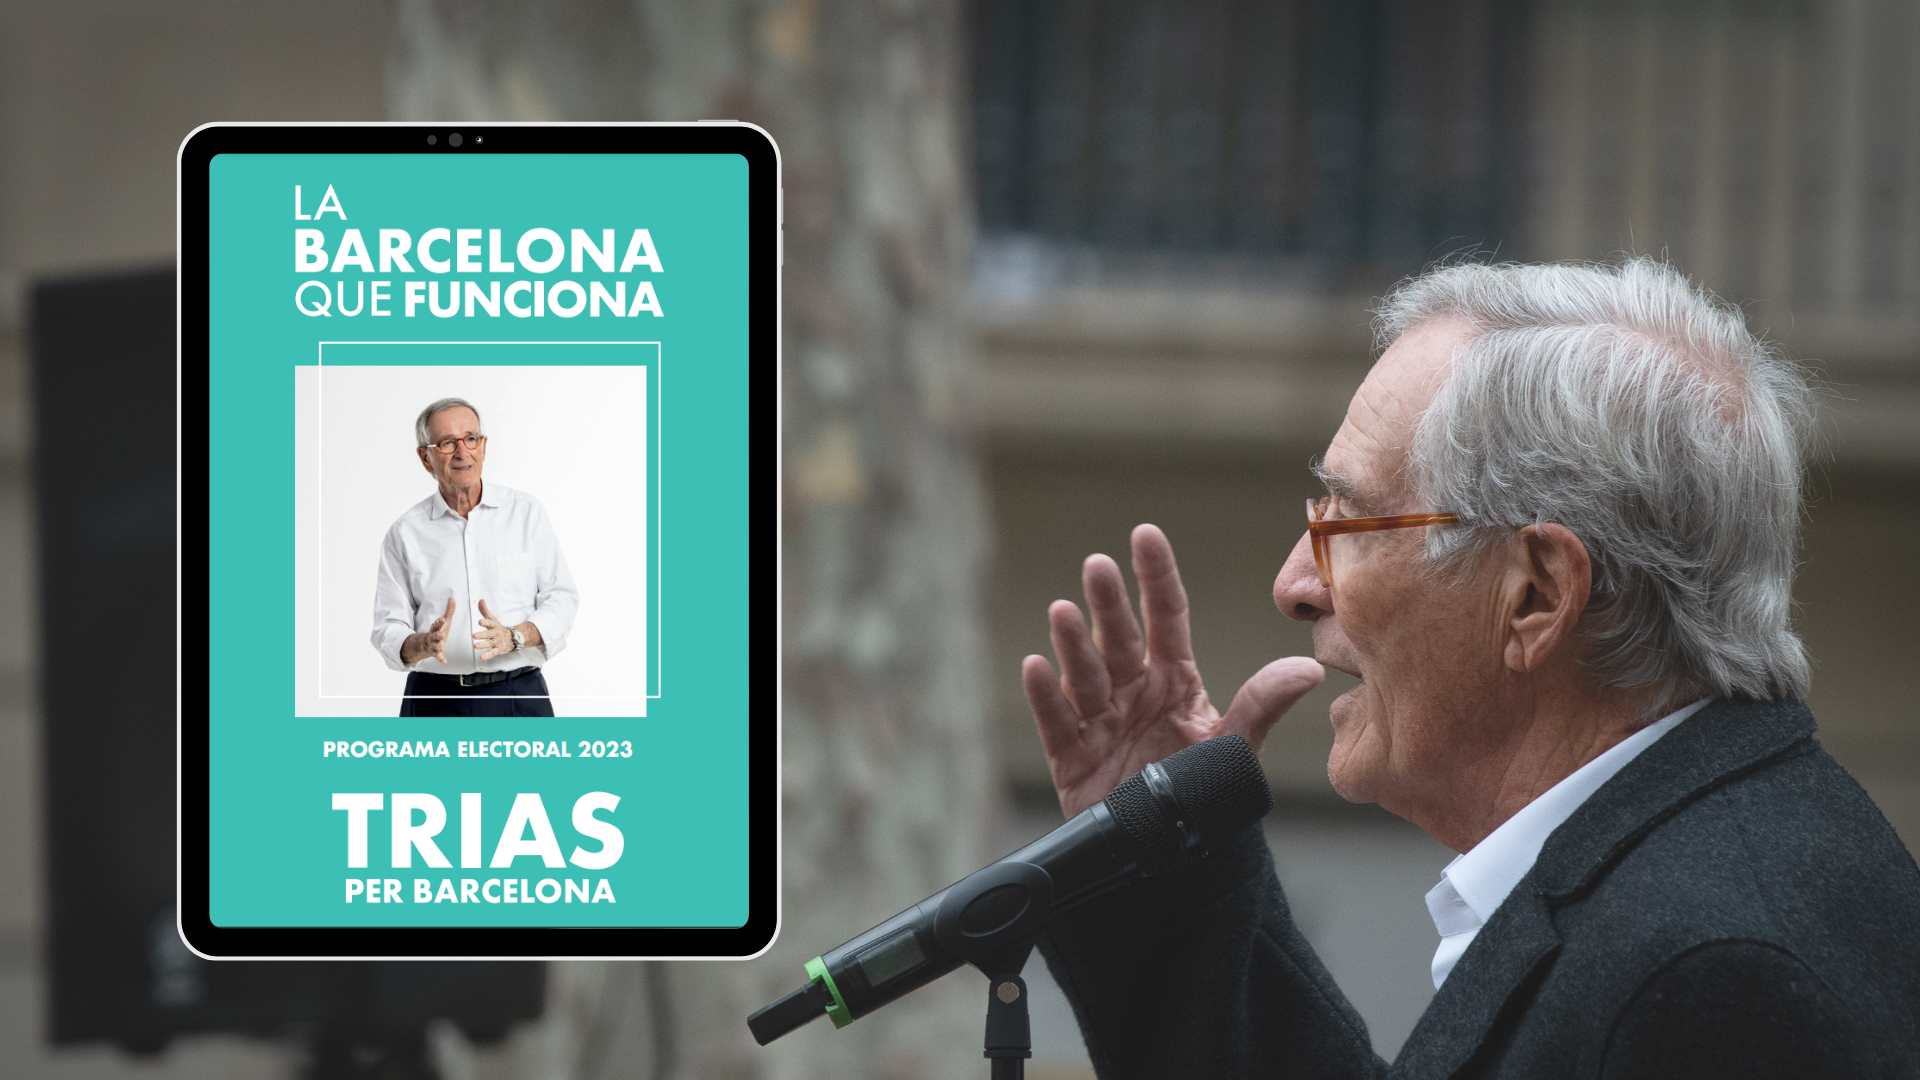 Programa electoral de Trias per Barcelona 2023: què proposa Xavier Trias?